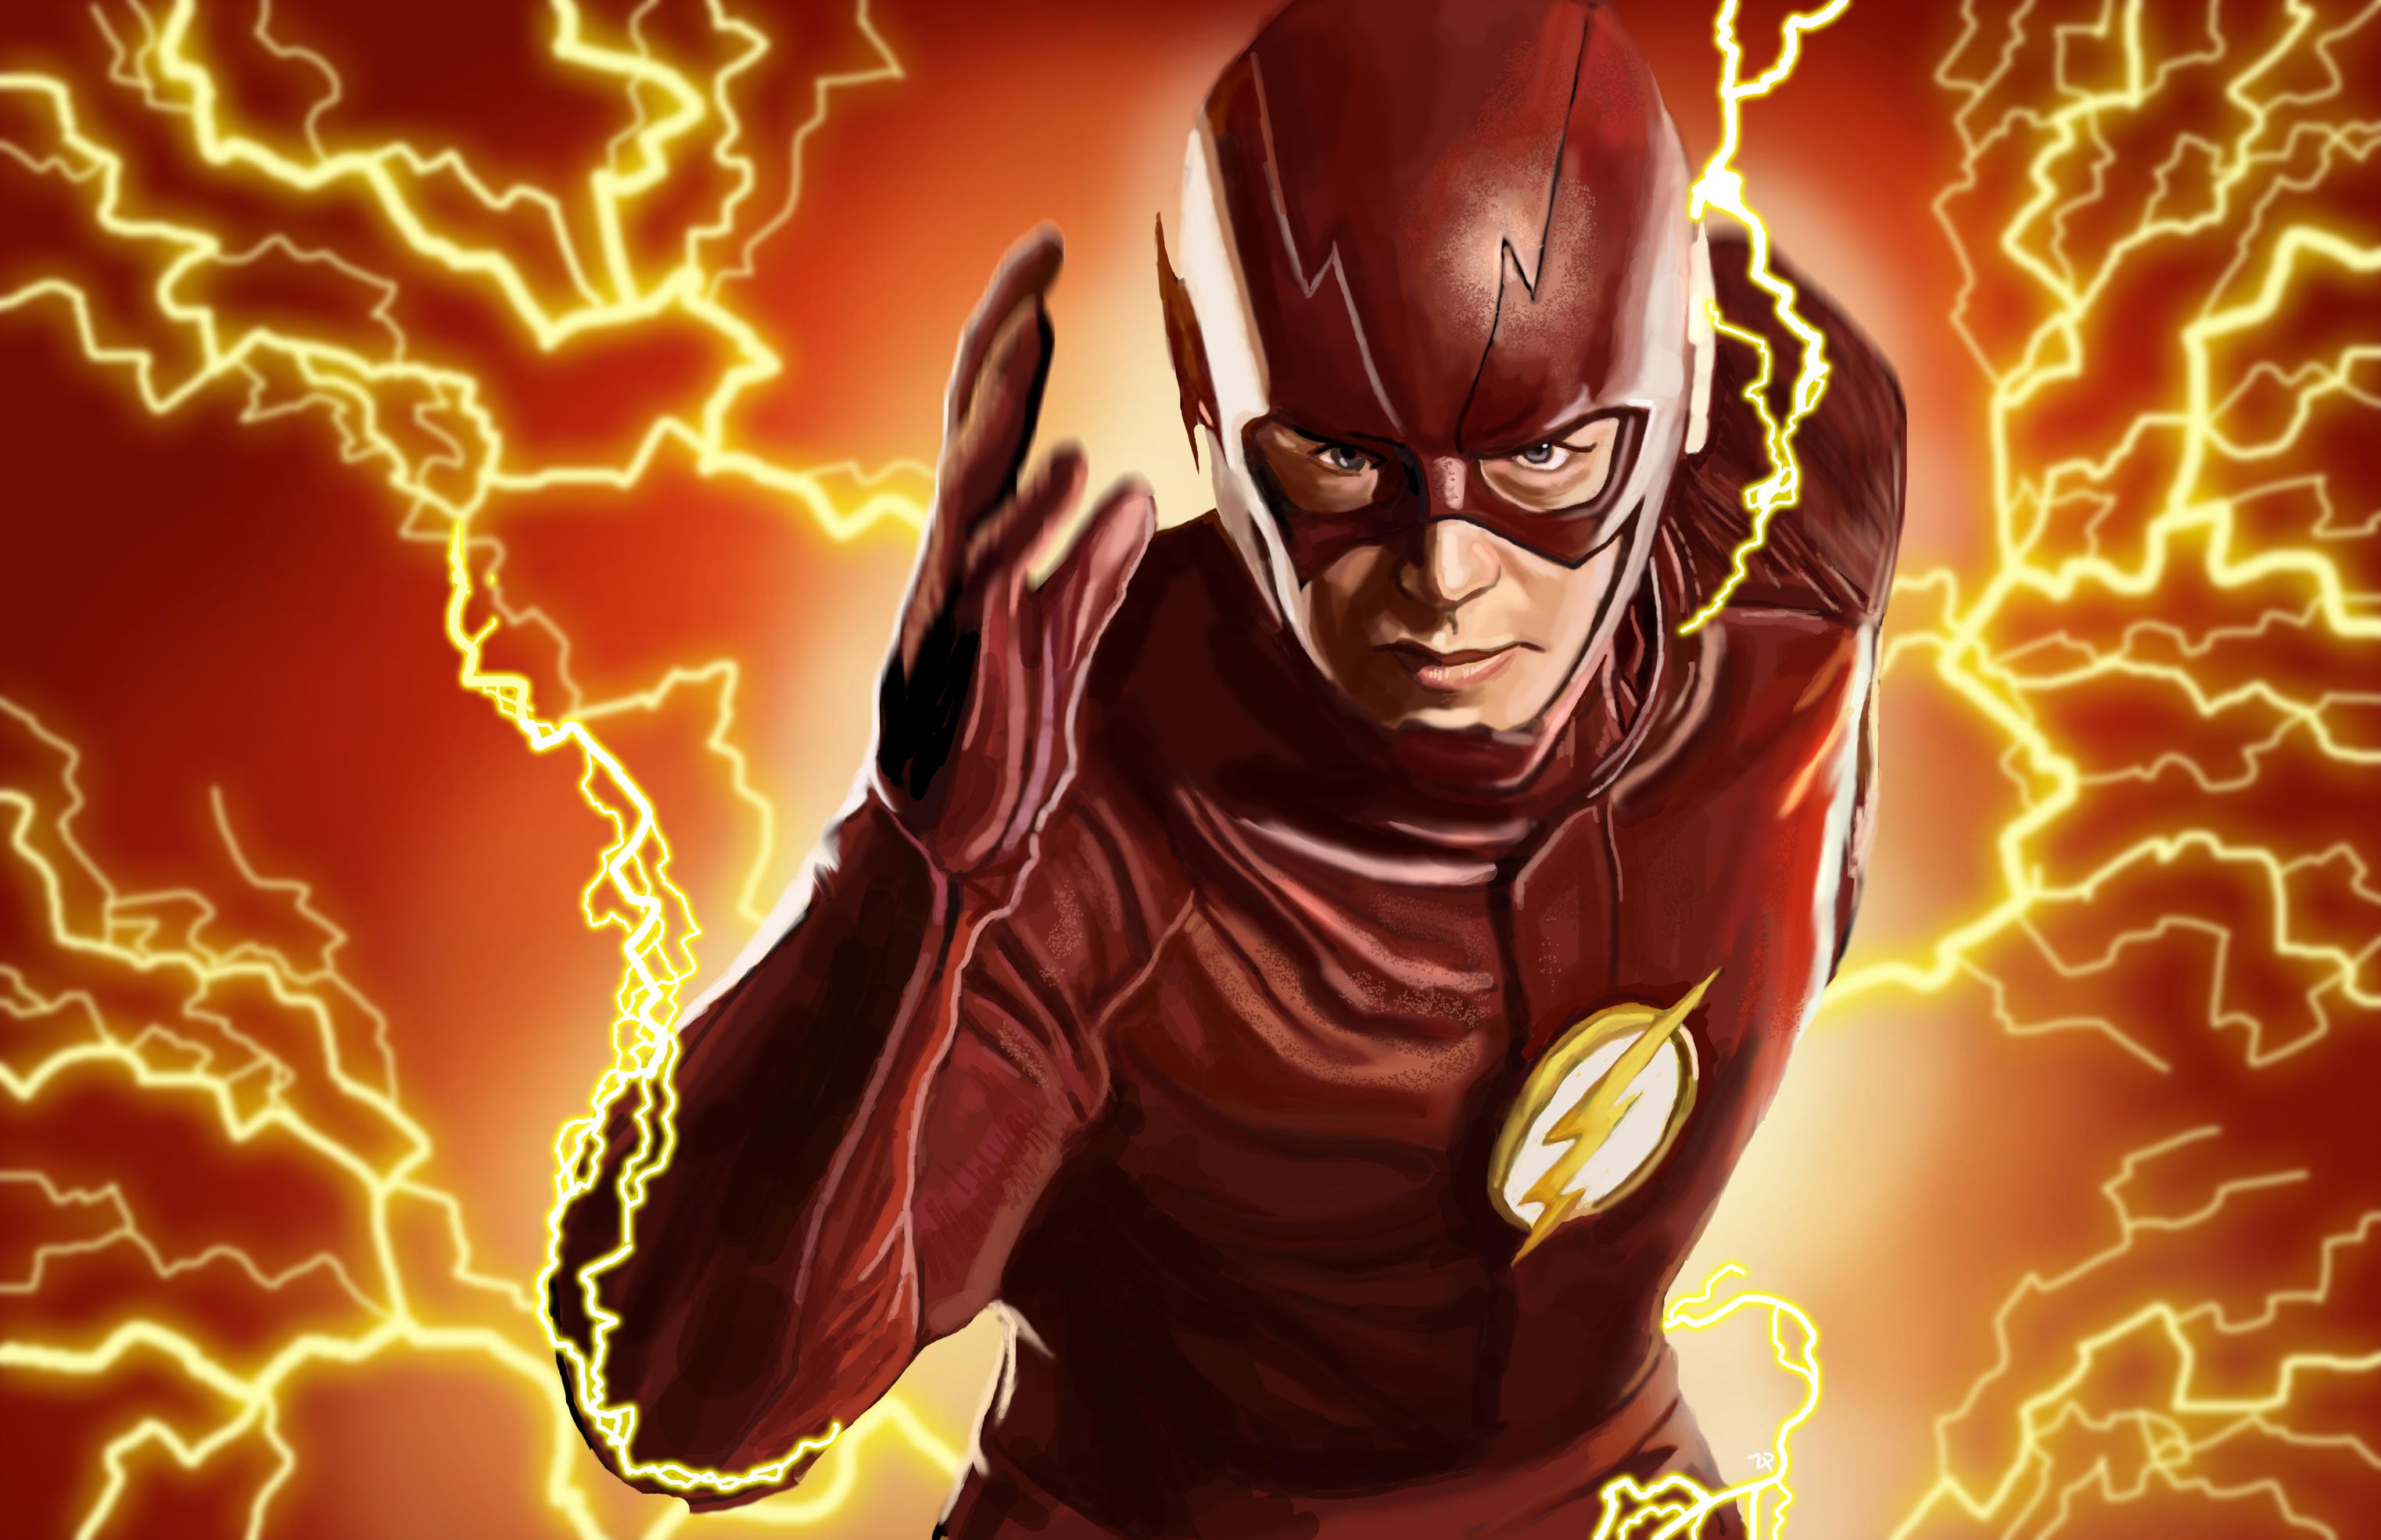 Flash res. Барри Аллен ДС. Флэш (DC Comics). Барри Аллен аватар. Barry Allen Flash.